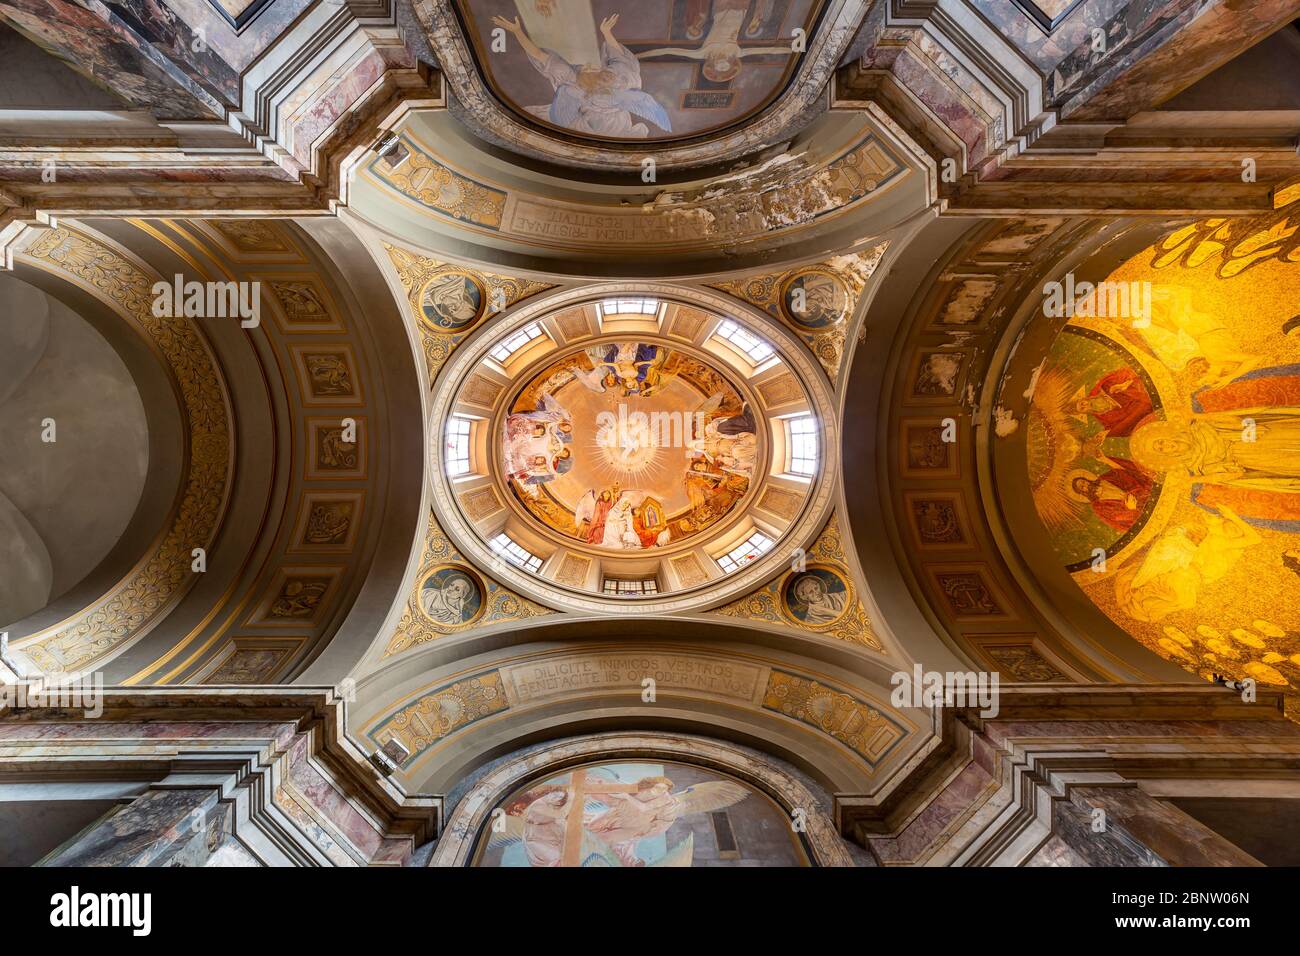 ROME, ITALY - AUGUST 13, 2019: The Basilica of Saint Praxedes, Rome, Italy Stock Photo